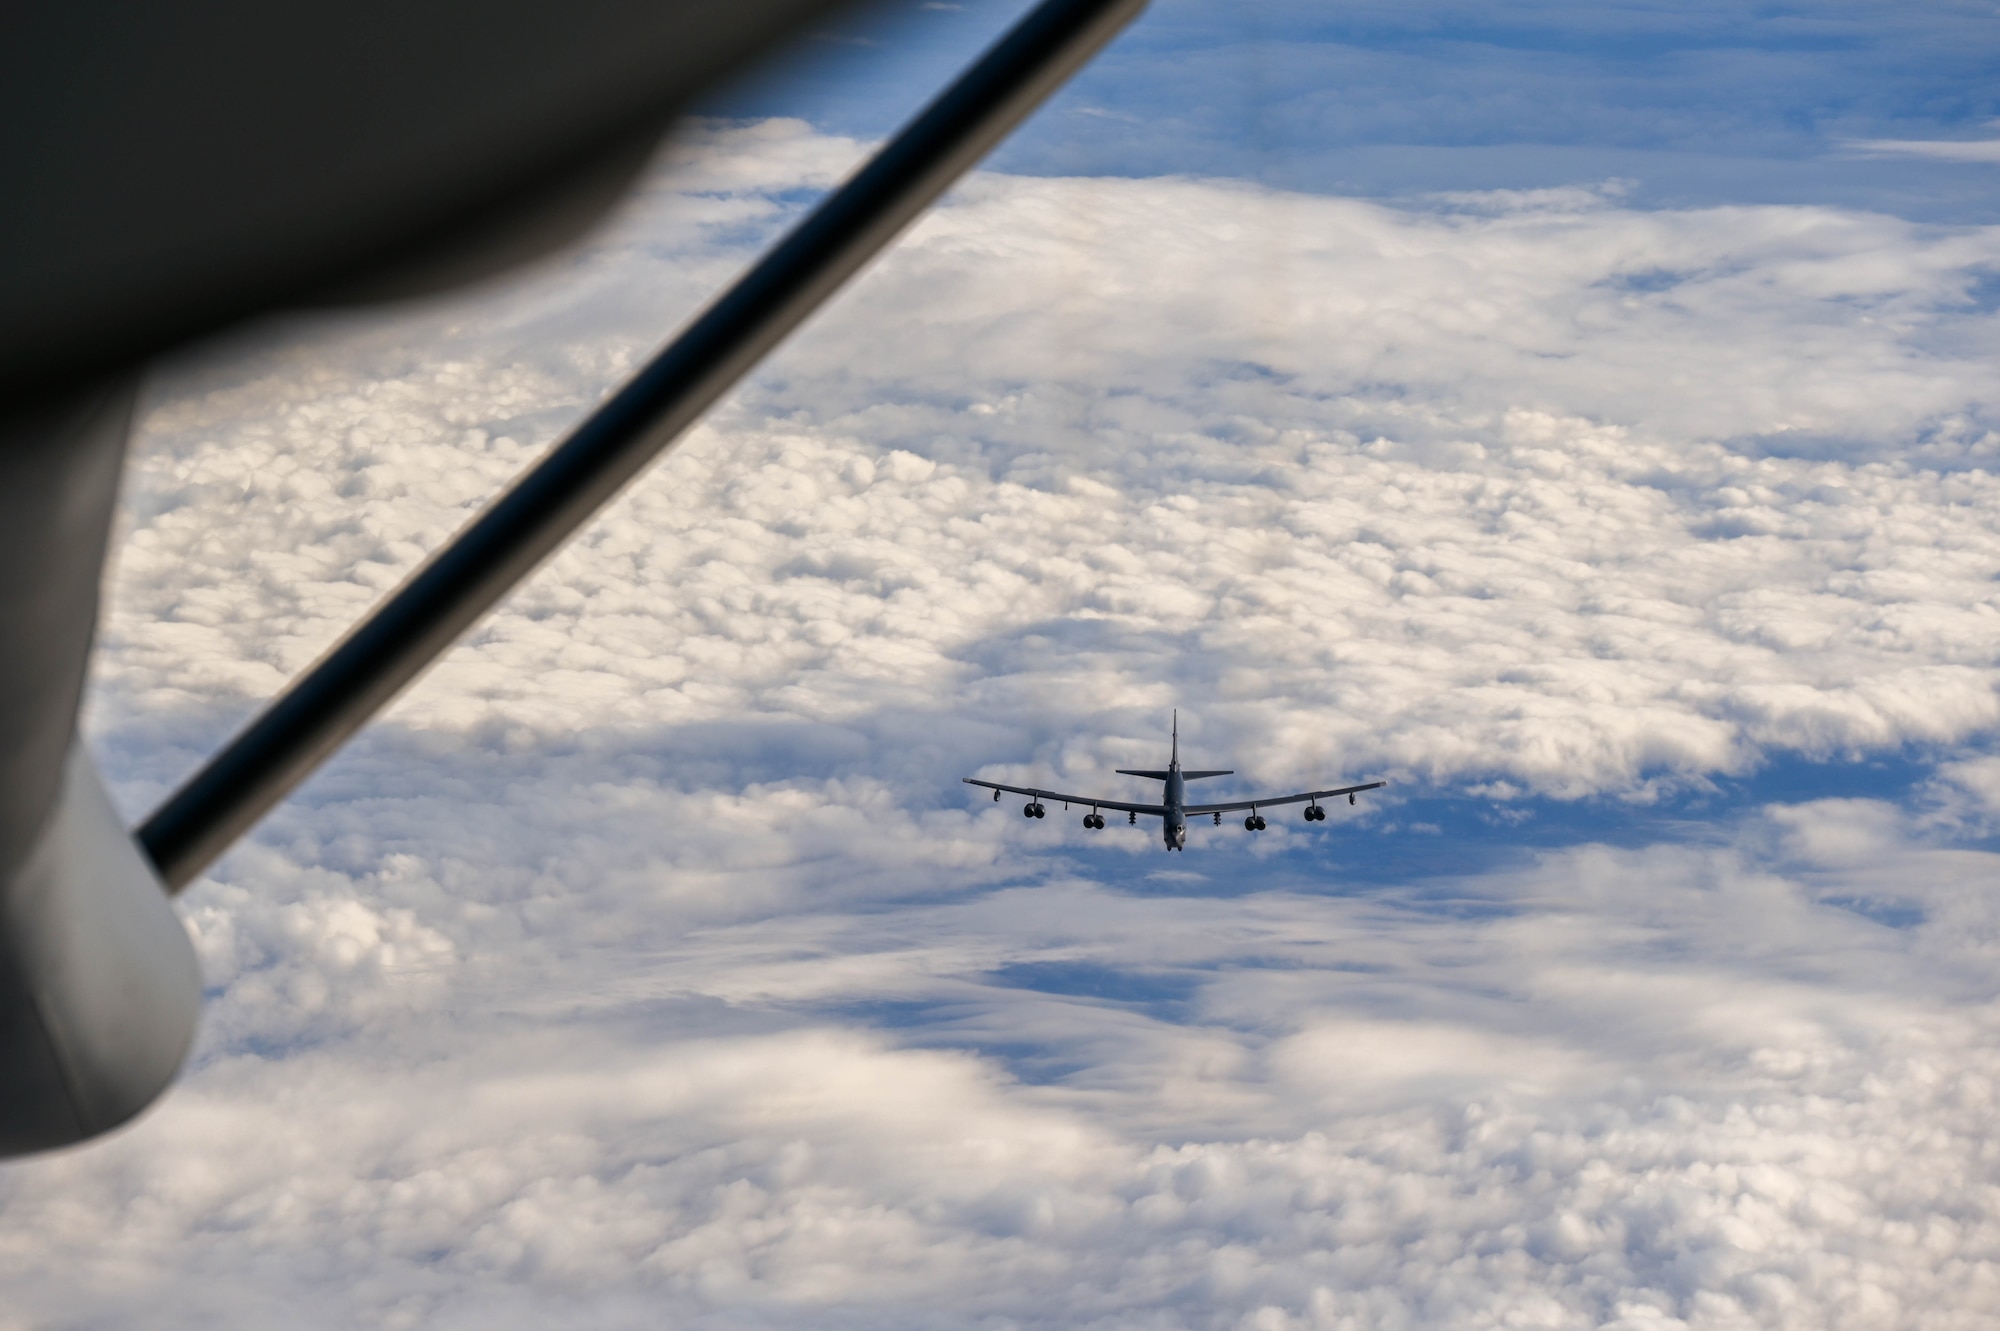 B-52 approaching KC-135 in midair